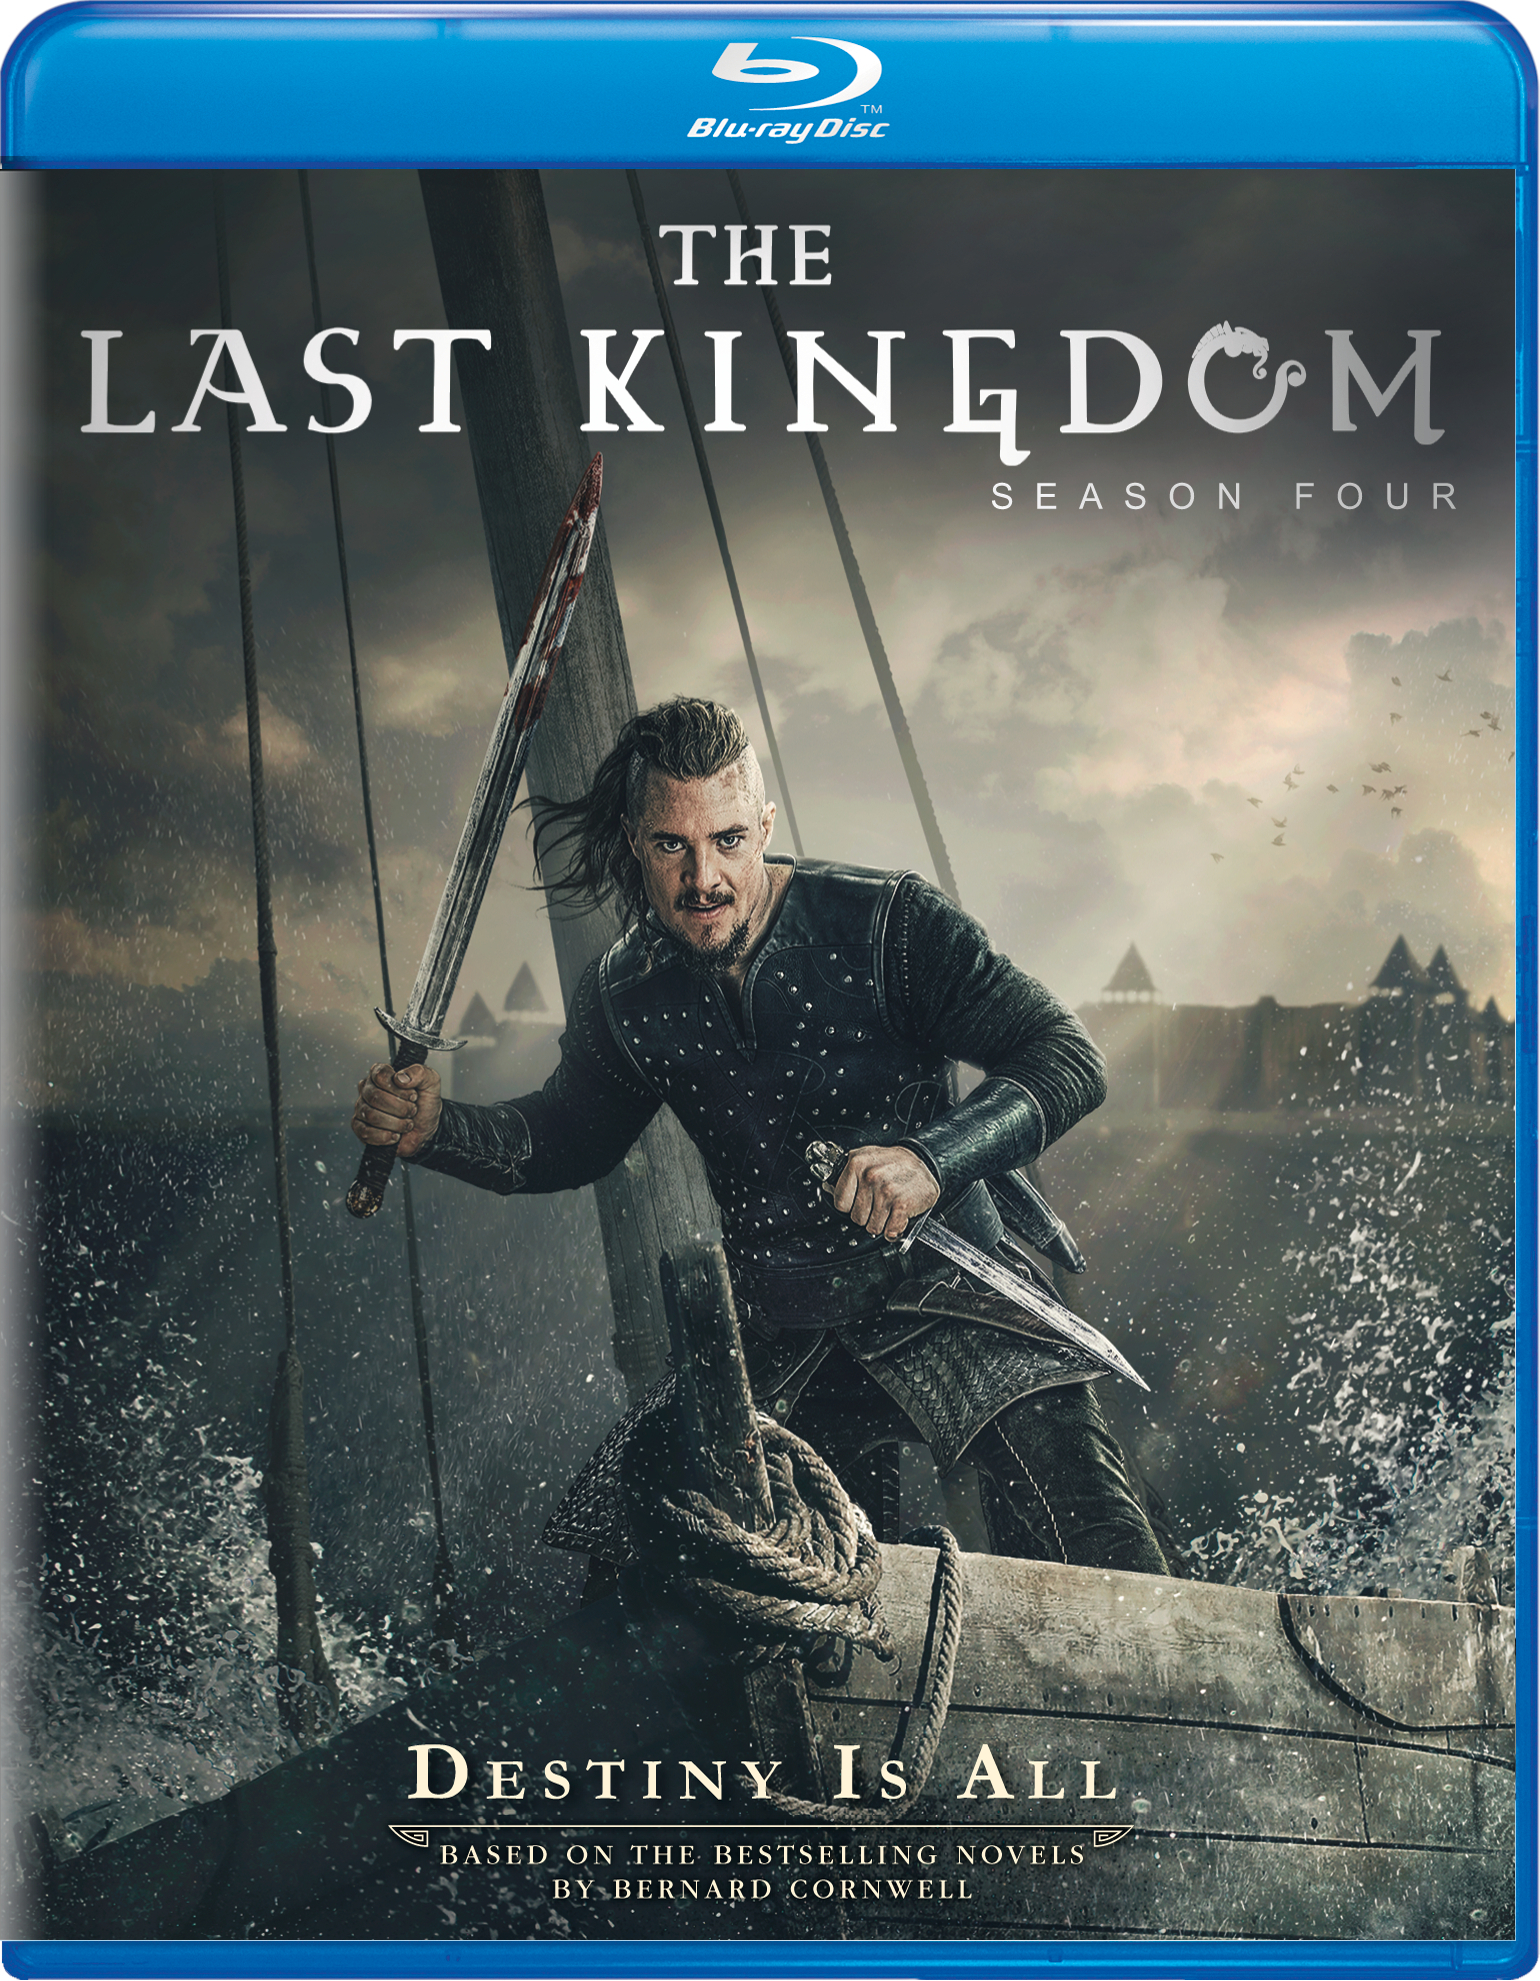 The Last Kingdom: Season Four - Blu-ray [ 2019 ]  - Drama Television On Blu-ray - TV Shows On GRUV